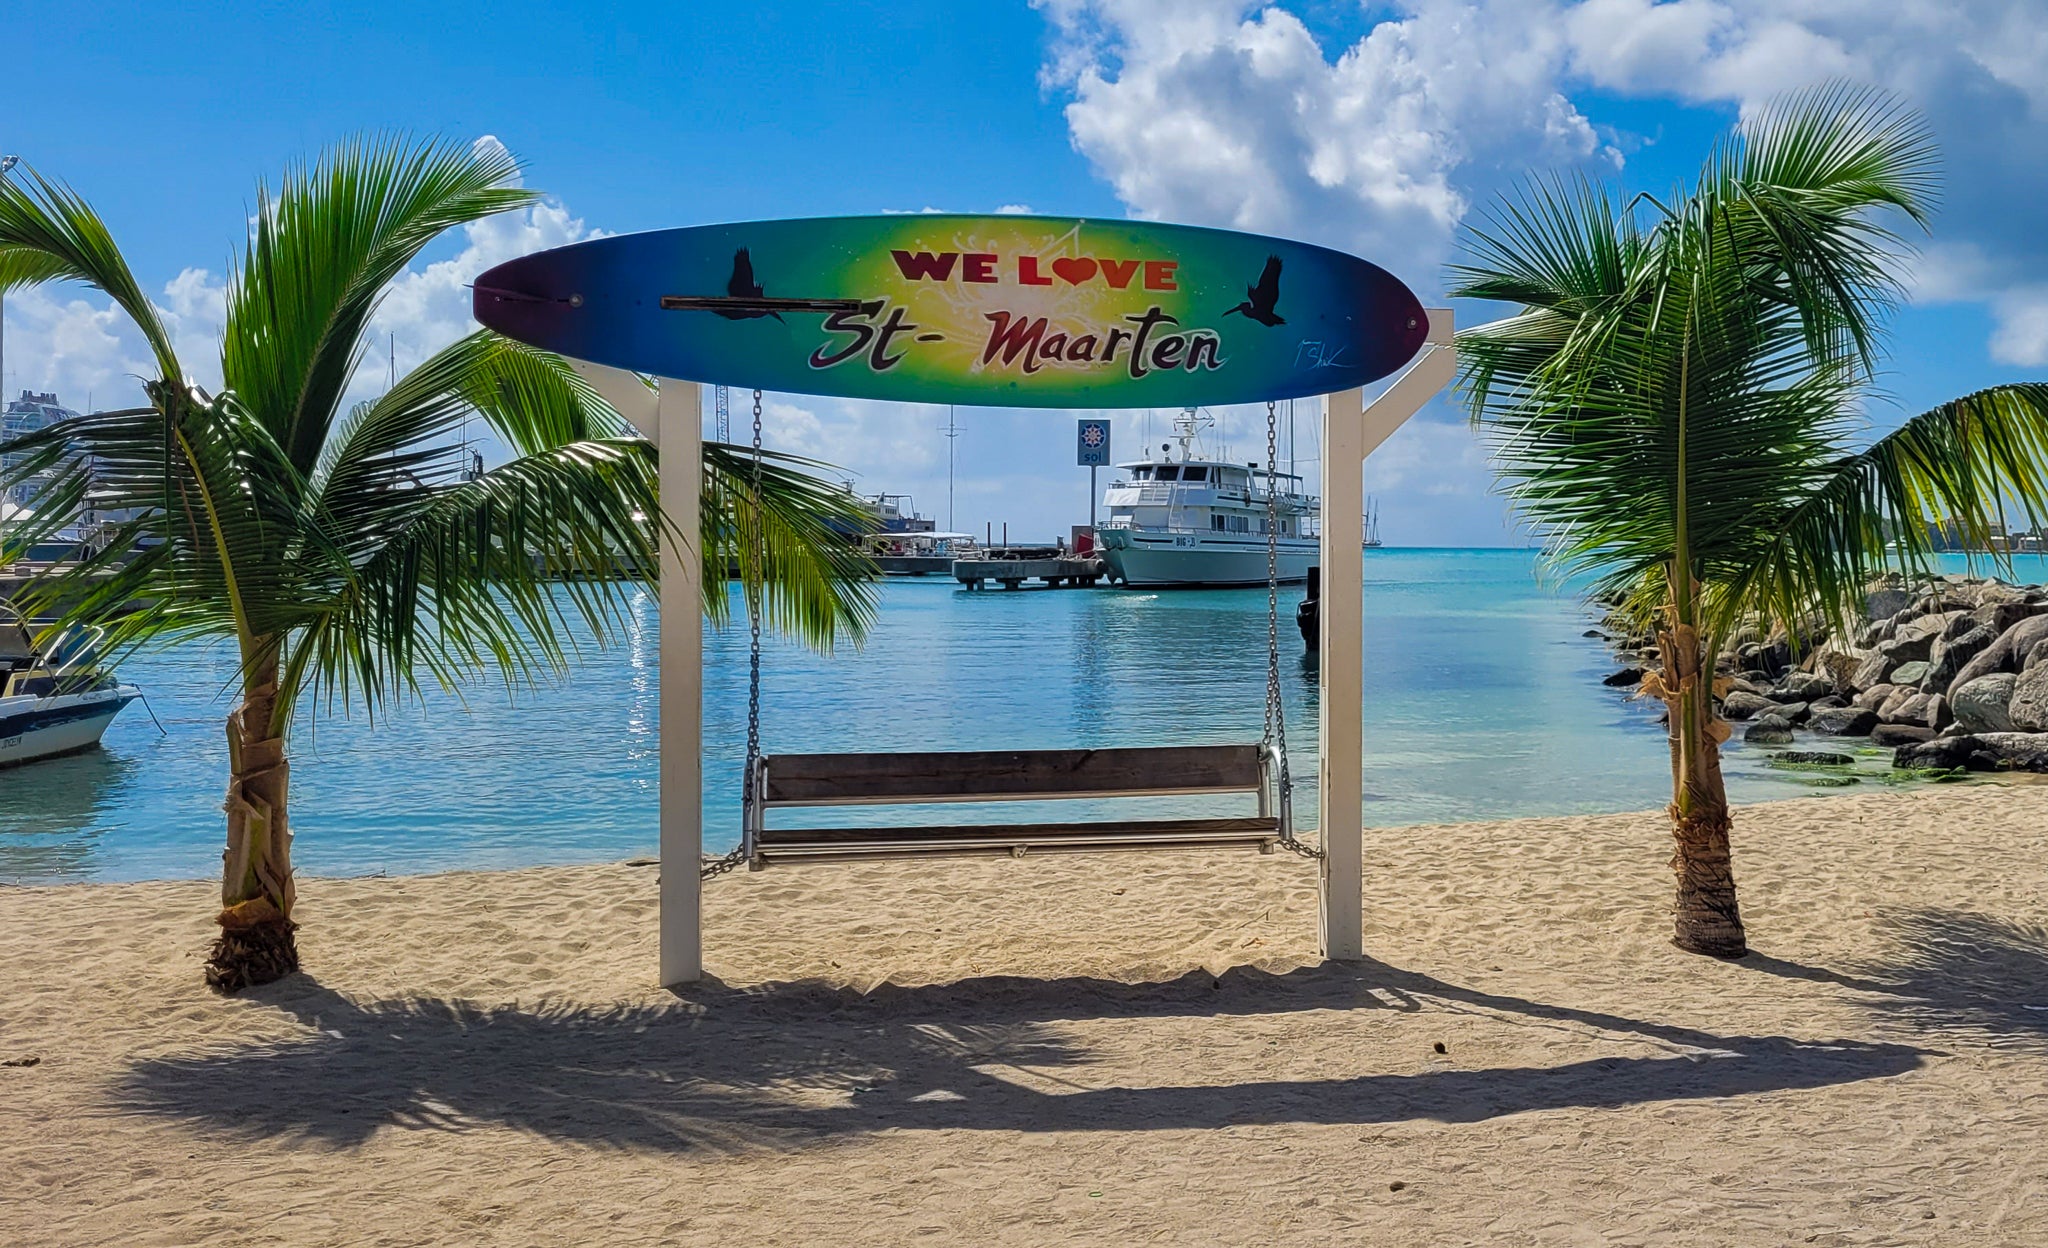 We love St-Maarten swing sign on the beach